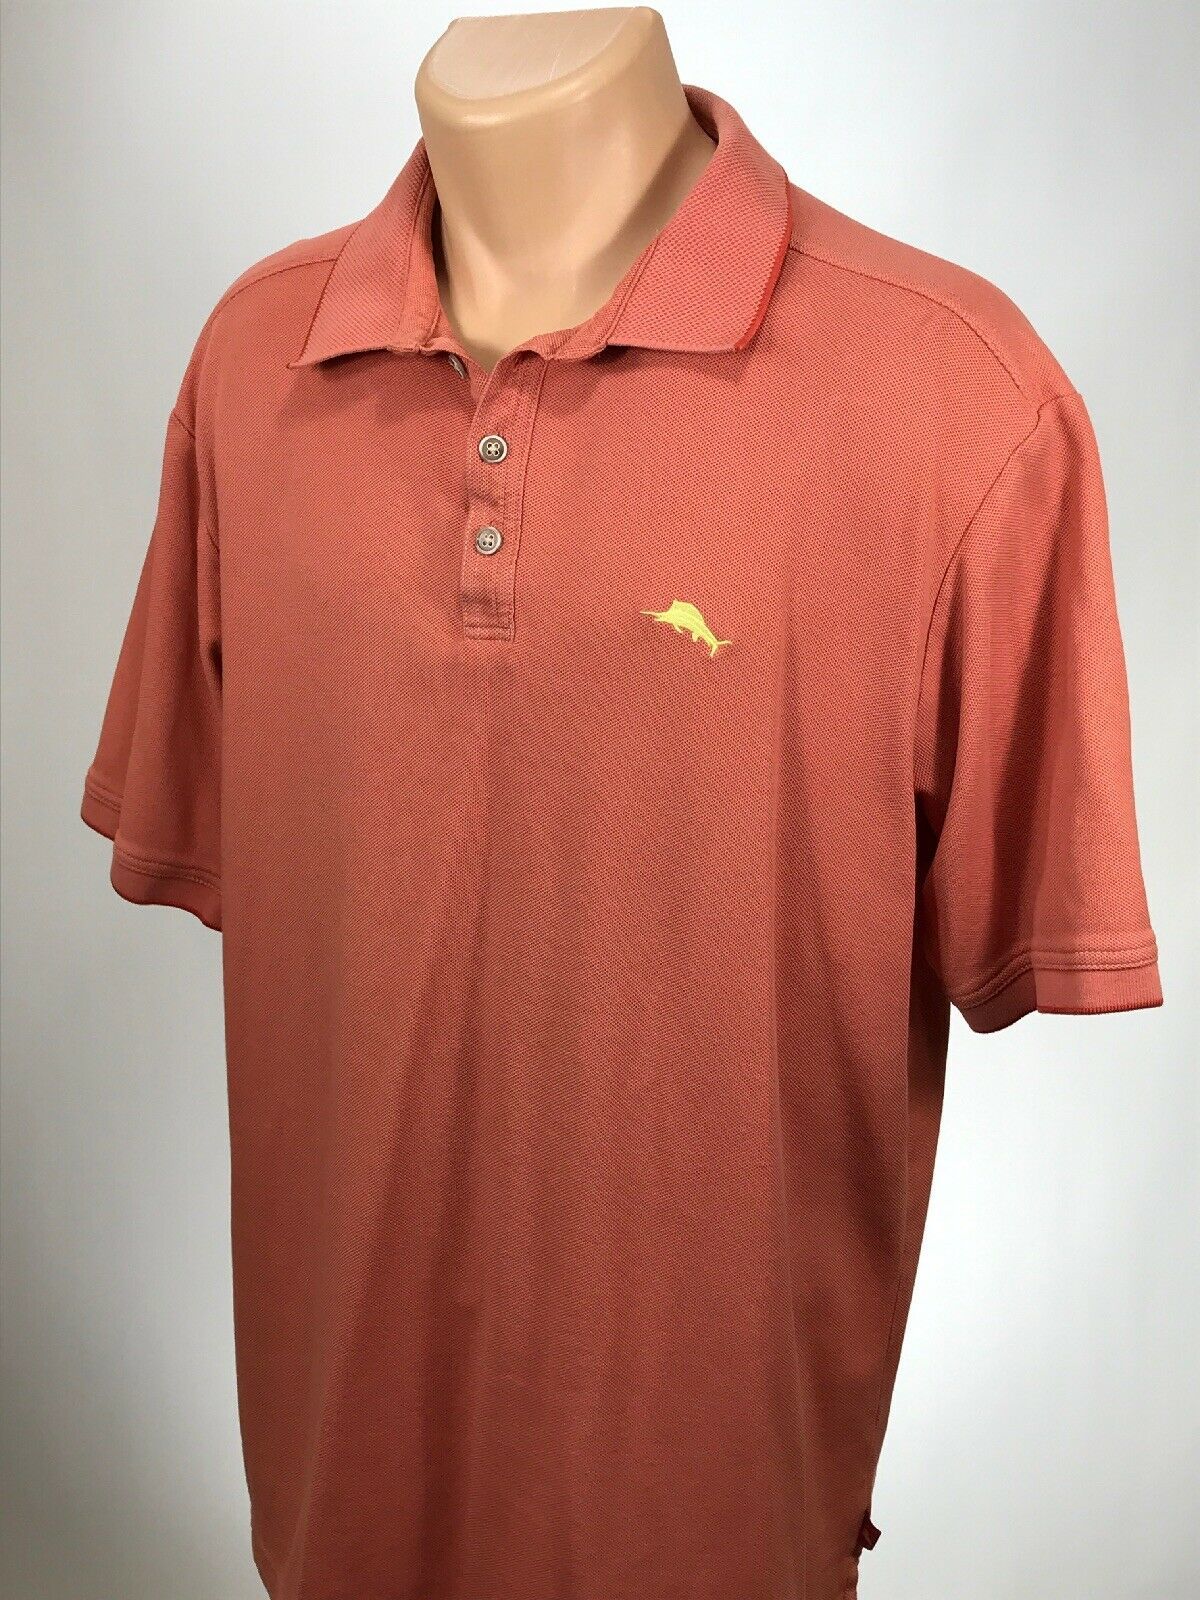 Tommy Bahama XL Polo Mens Shirt Size XL Short Sleeve - Men's Clothing